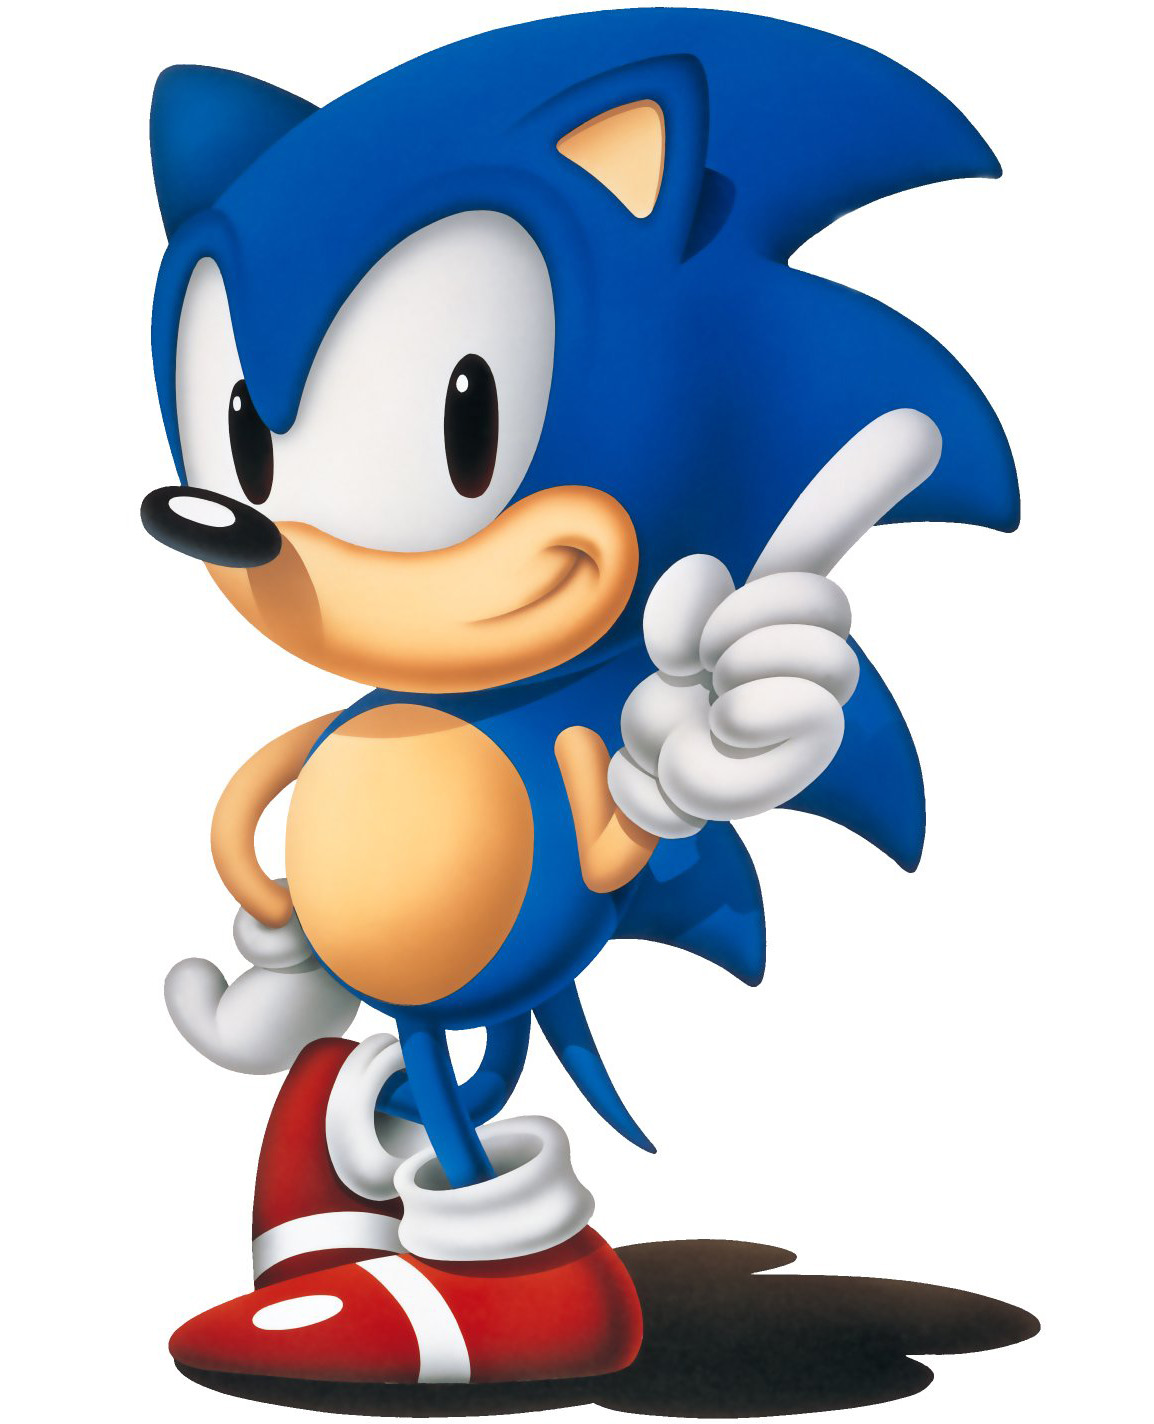 Sonic старая версия